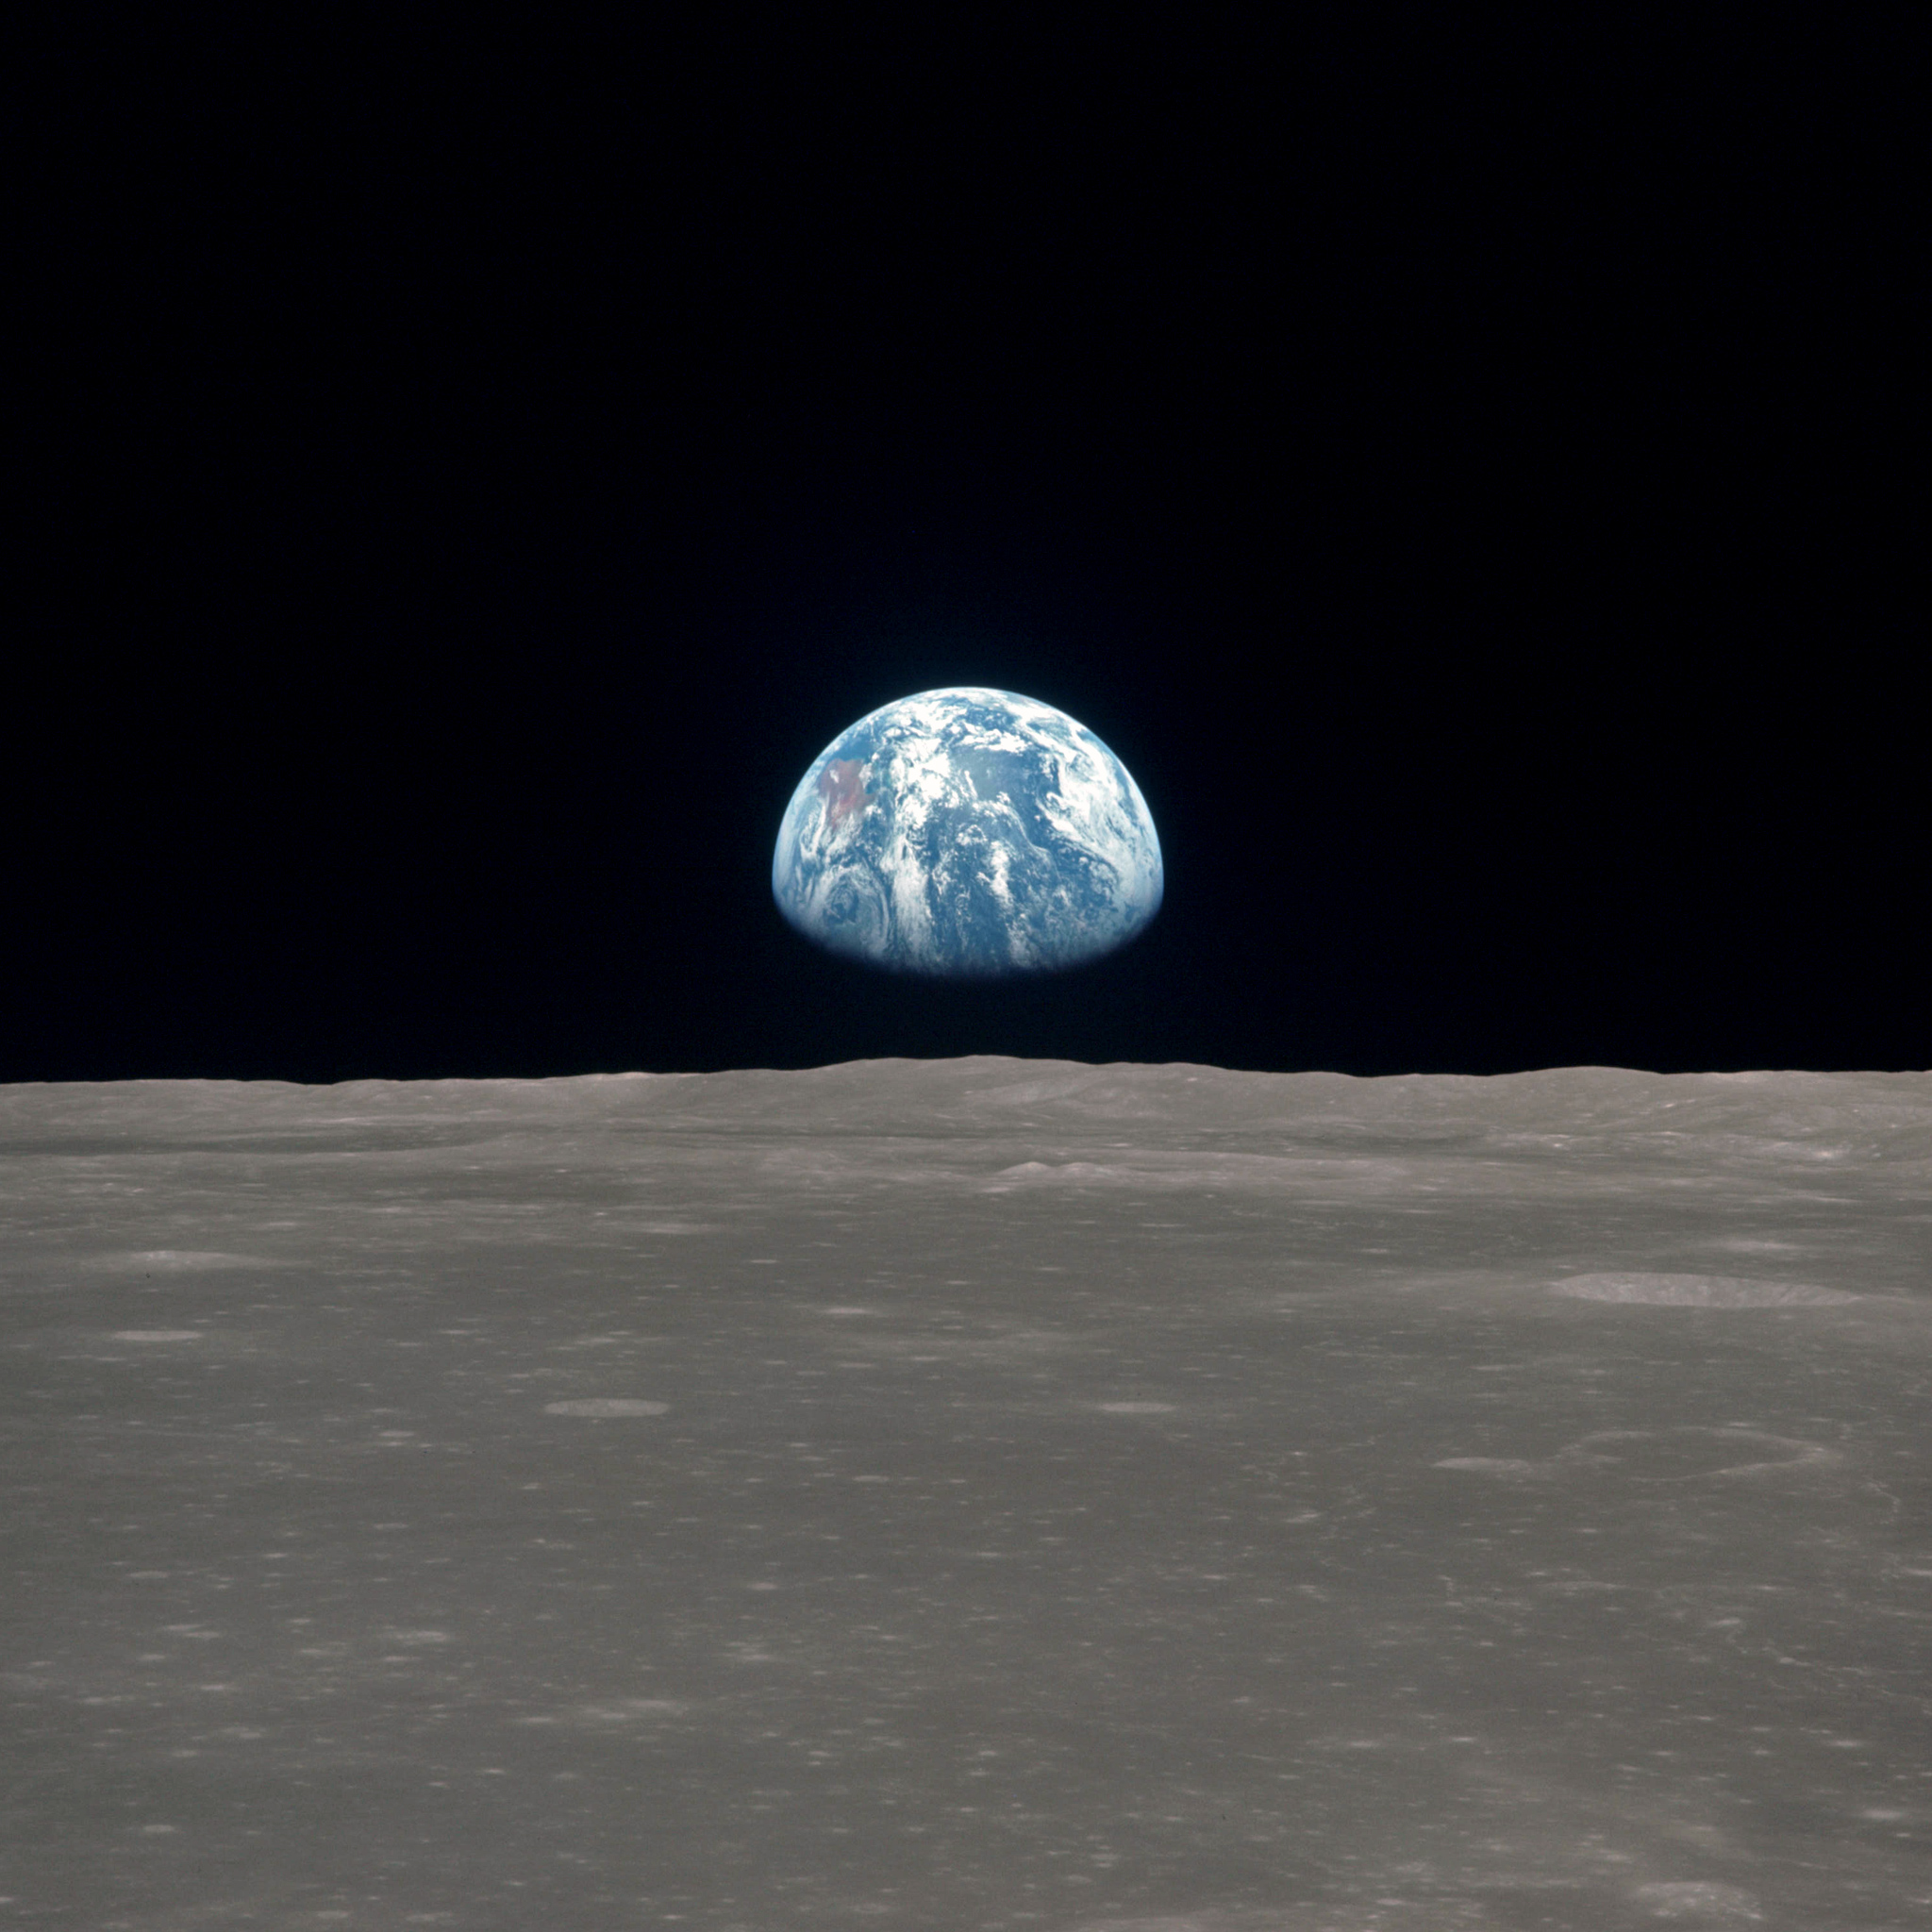 ipad space wallpaper,luna,objeto astronómico,ligero,tierra,atmósfera